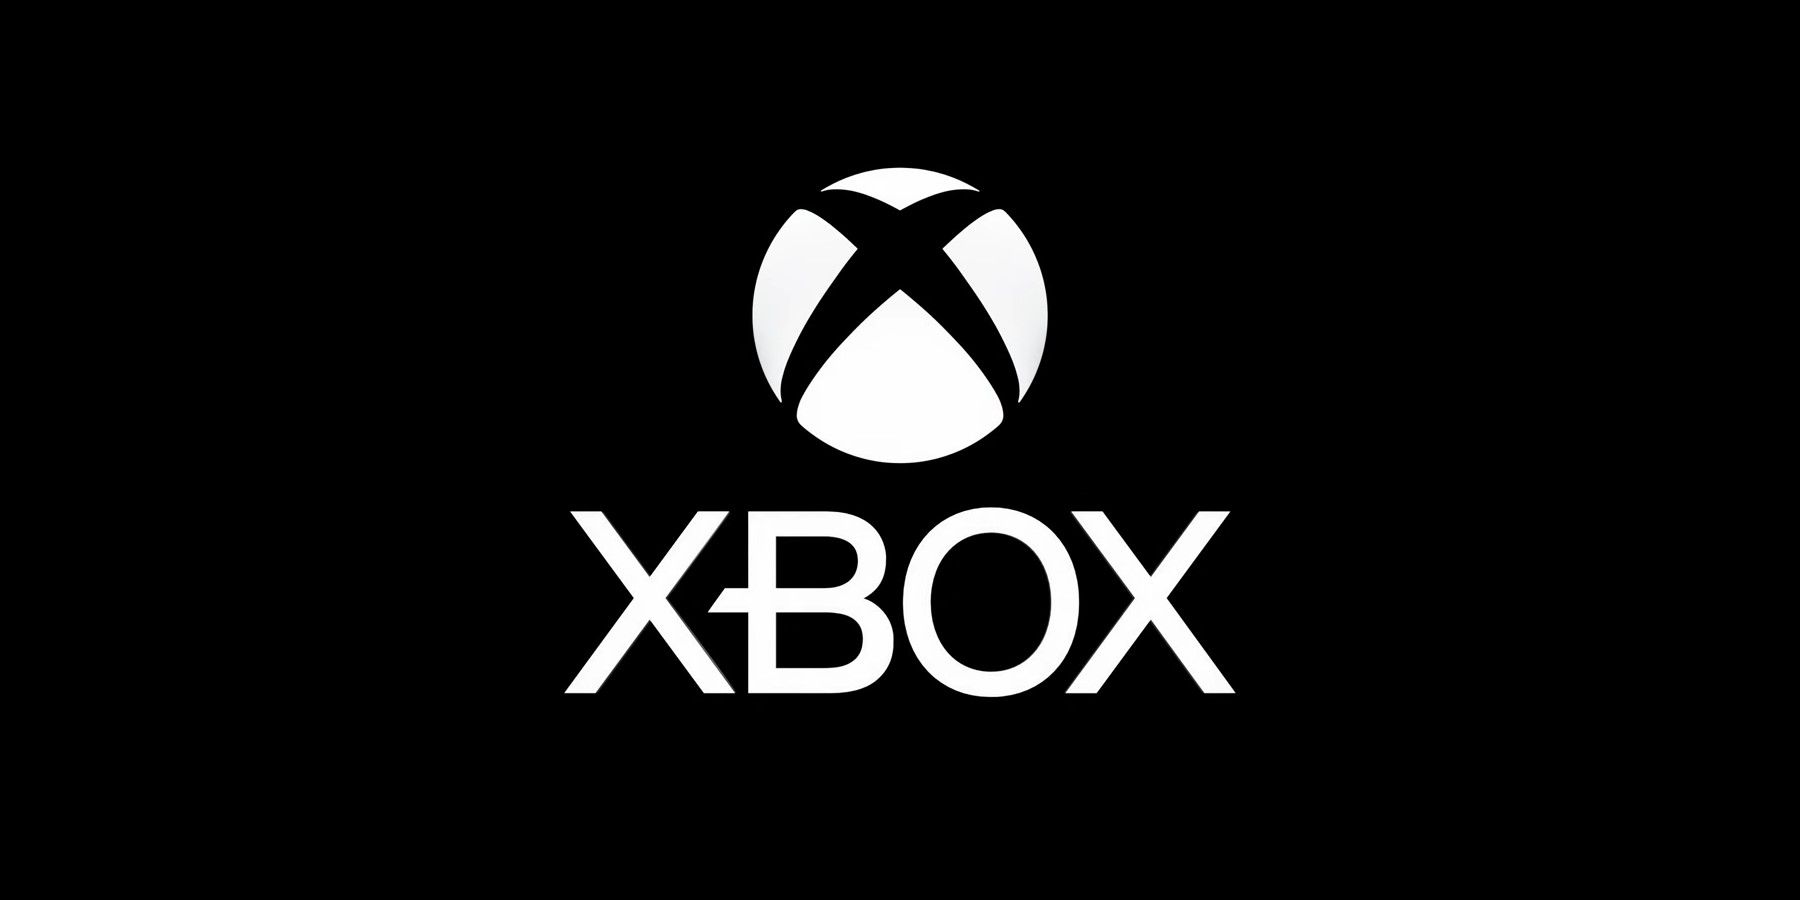 Xbox Controller to Propose